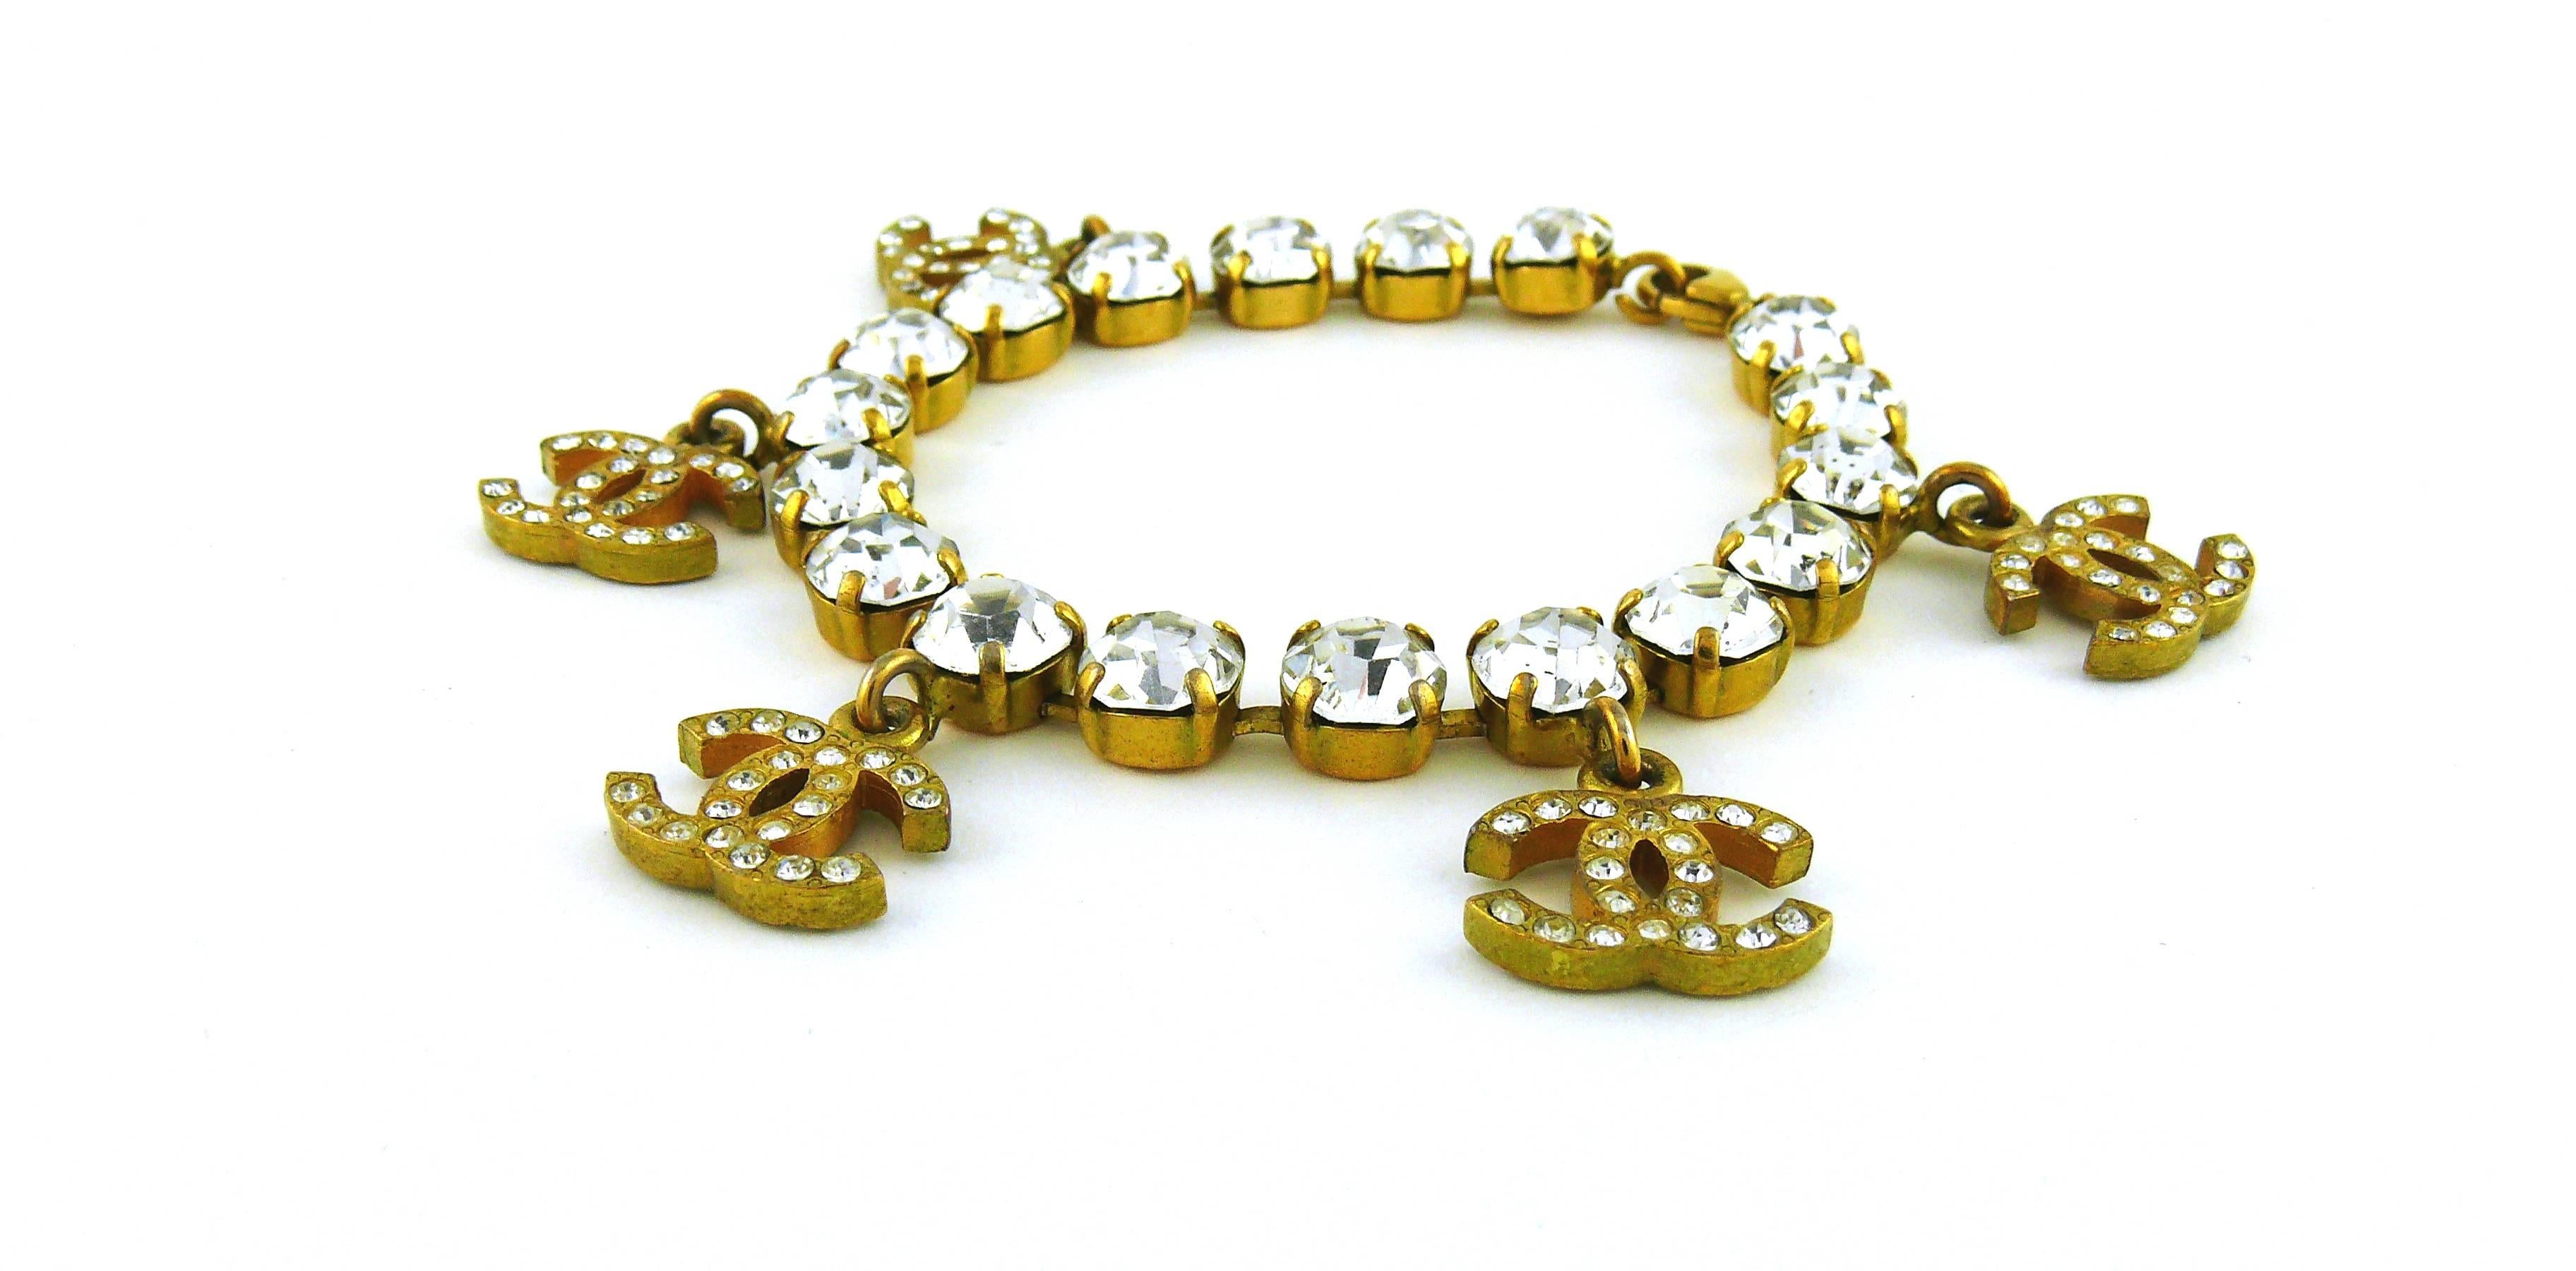 cc charms for bracelets